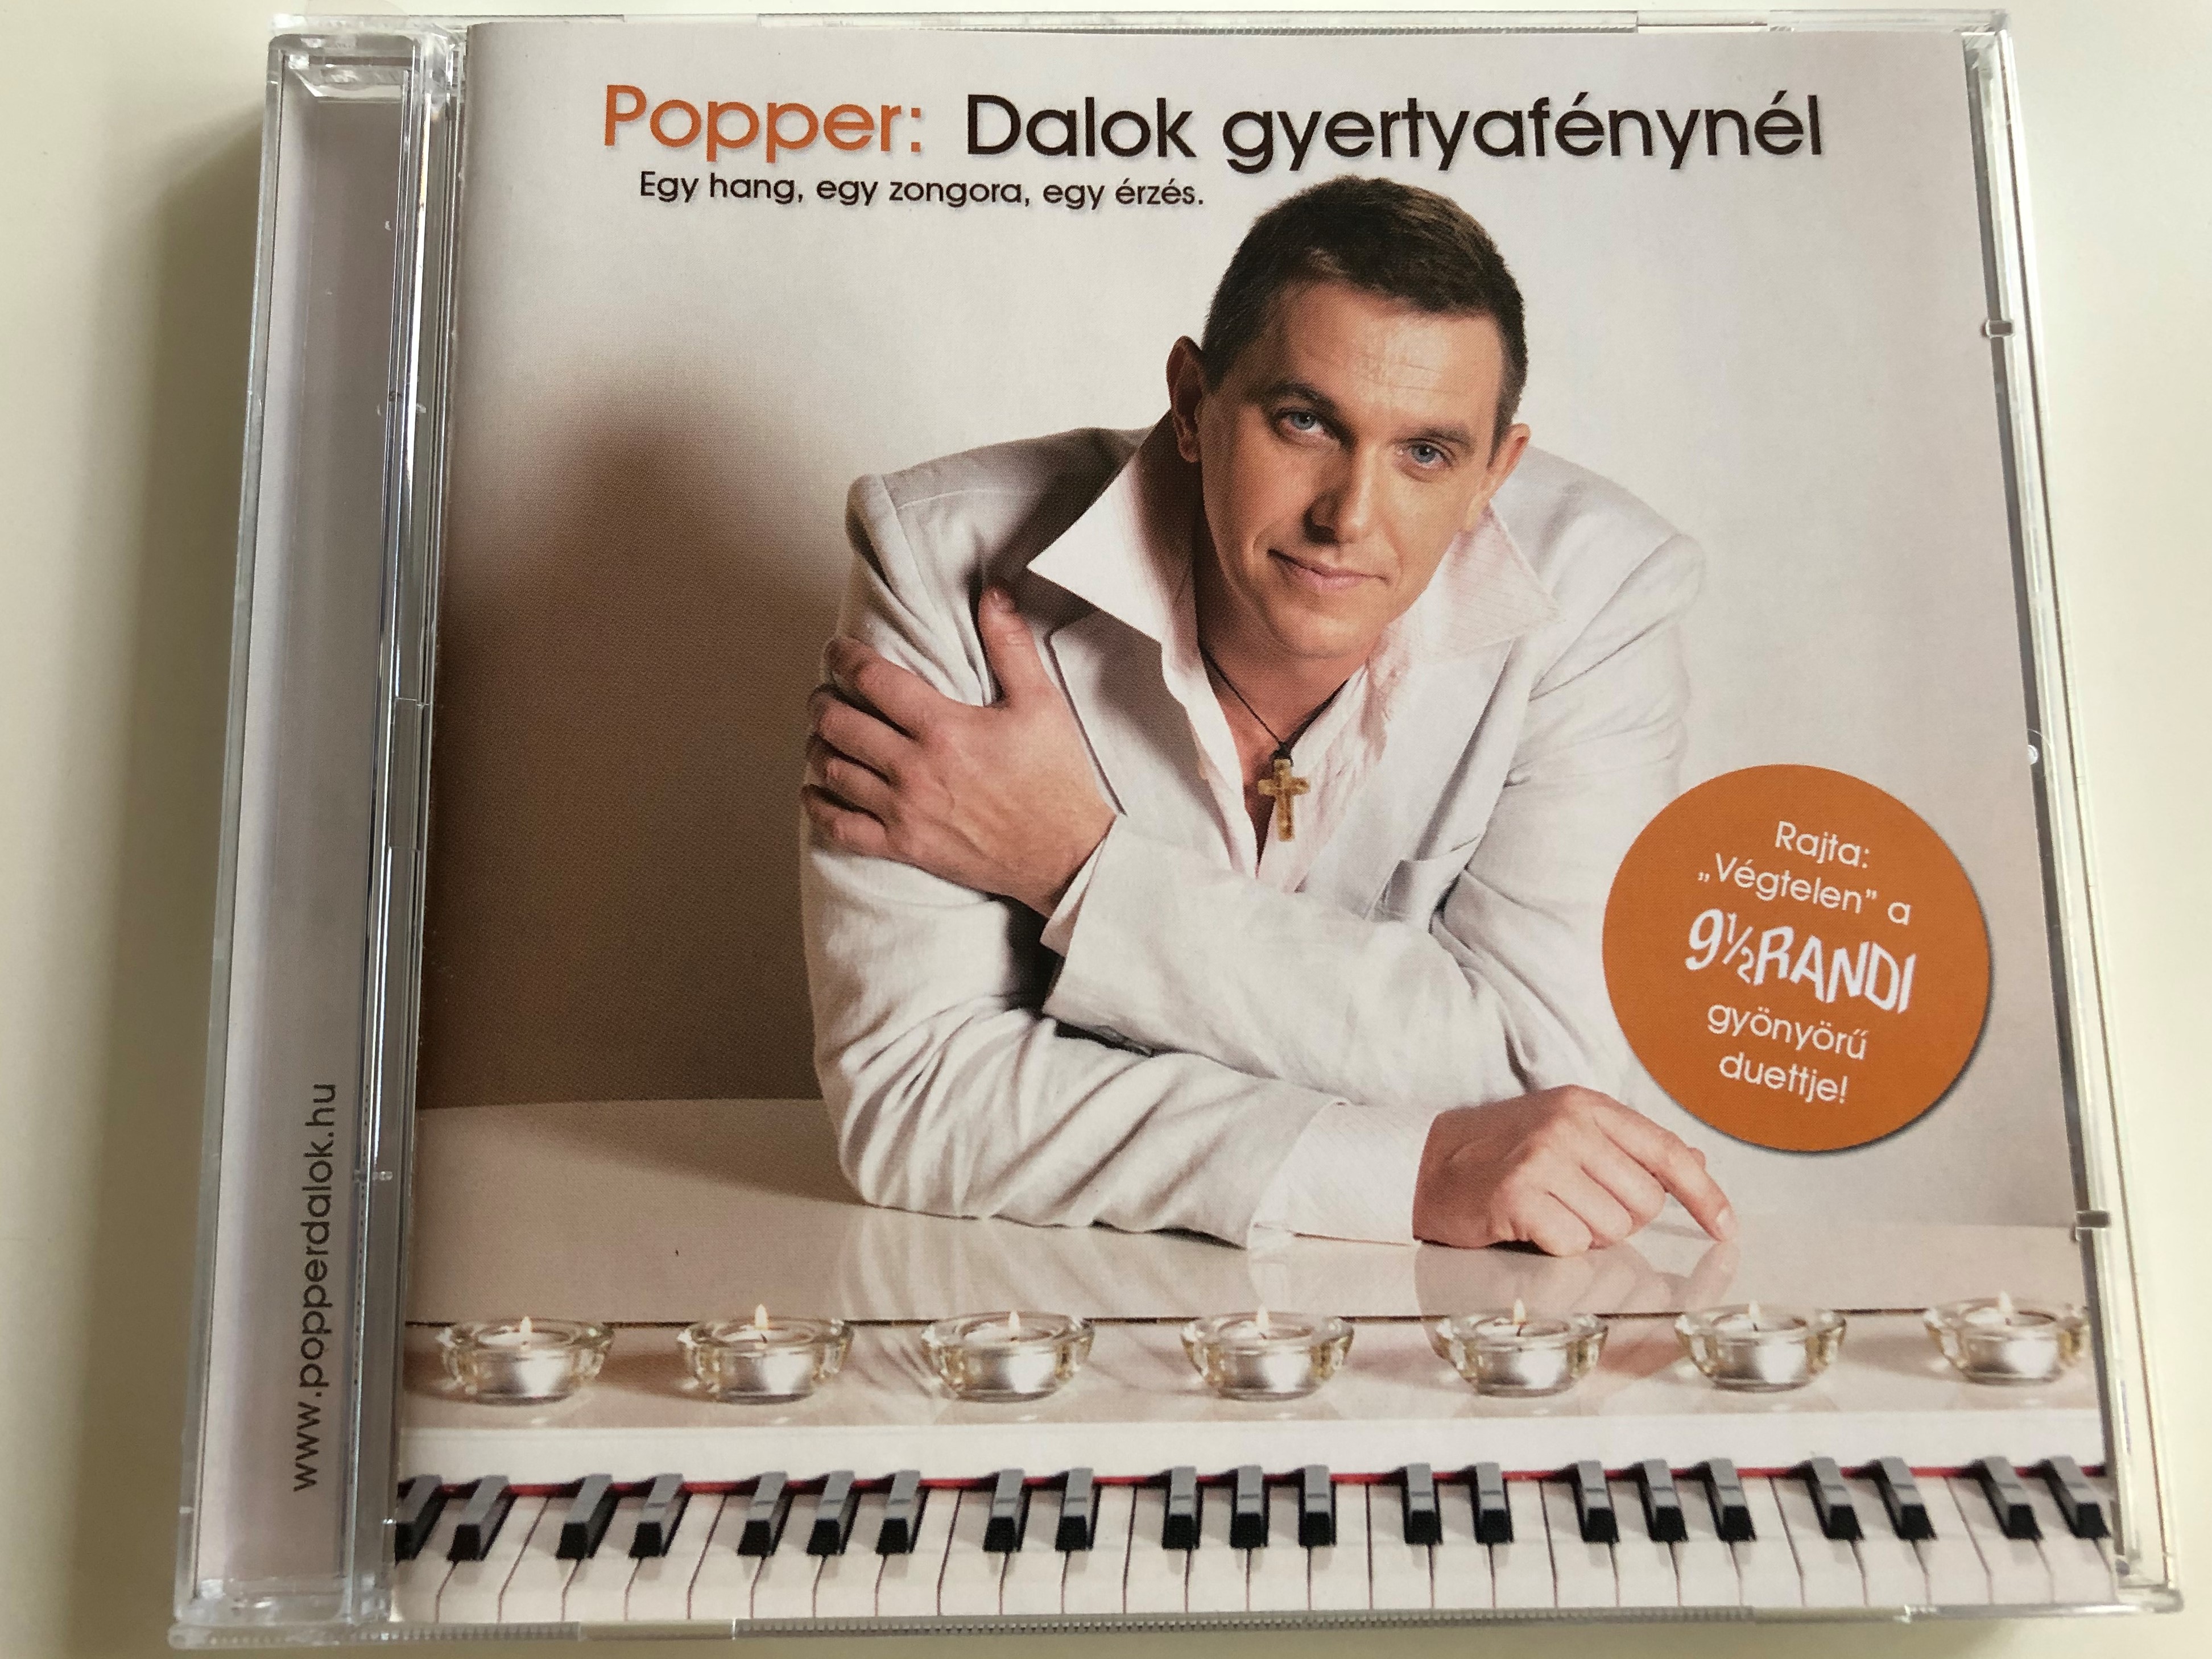 popper-dalok-gyertyaf-nyn-l-egy-hang-egy-zongora-egy-rz-s-rajta-v-gtelen-a-9-12-randi-gy-ny-r-duettje-audio-cd-dbmm214-1-.jpg